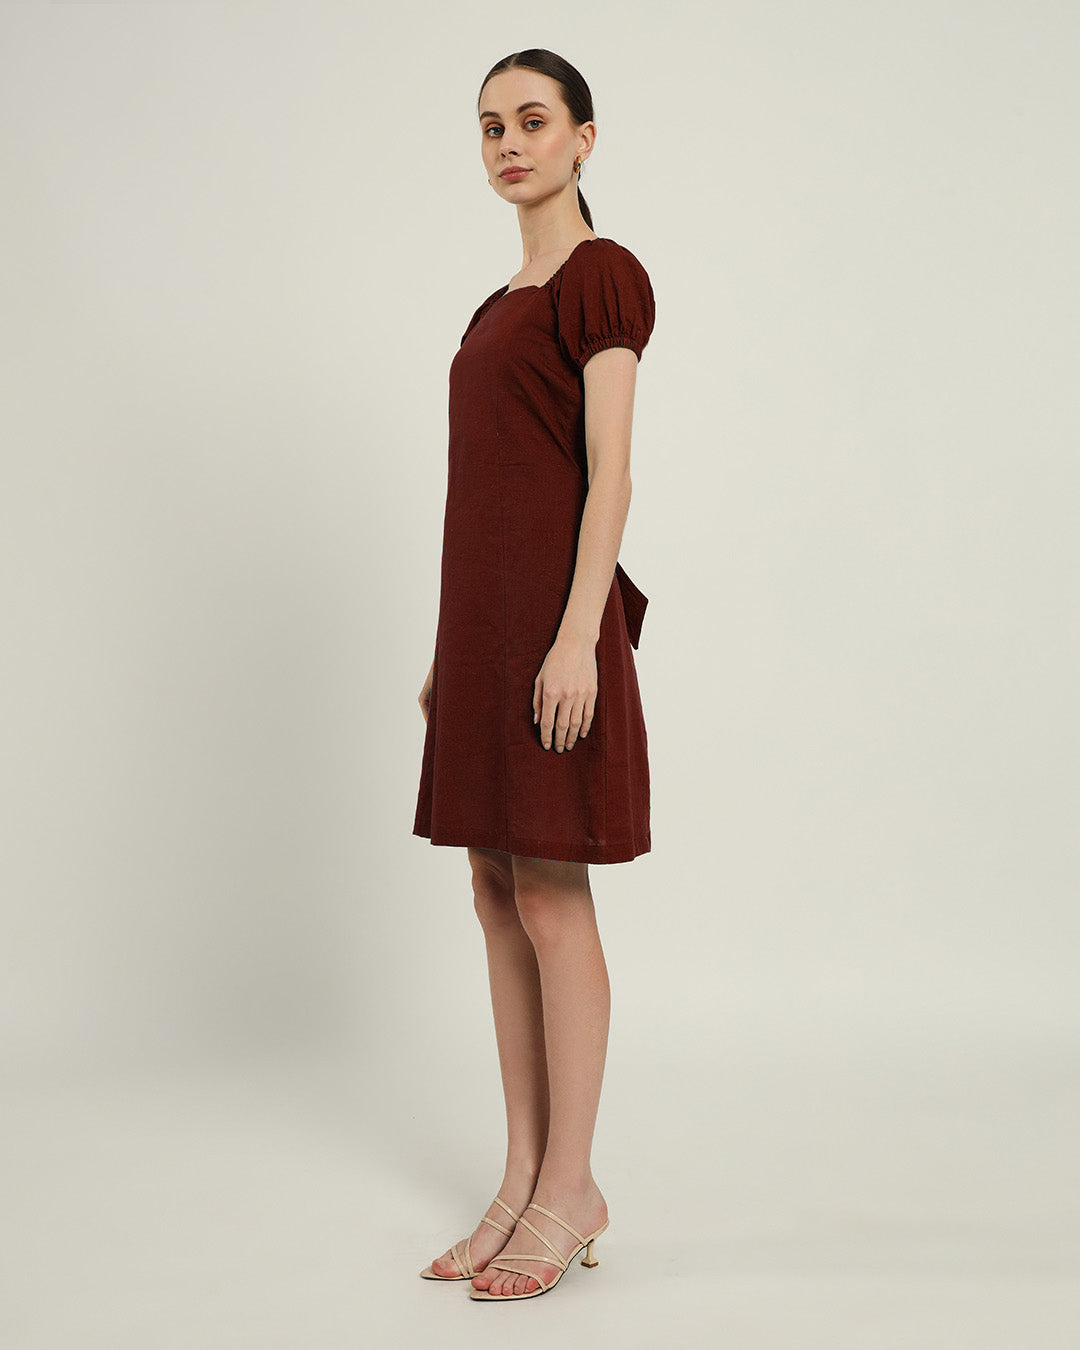 The Arar Rouge Dress